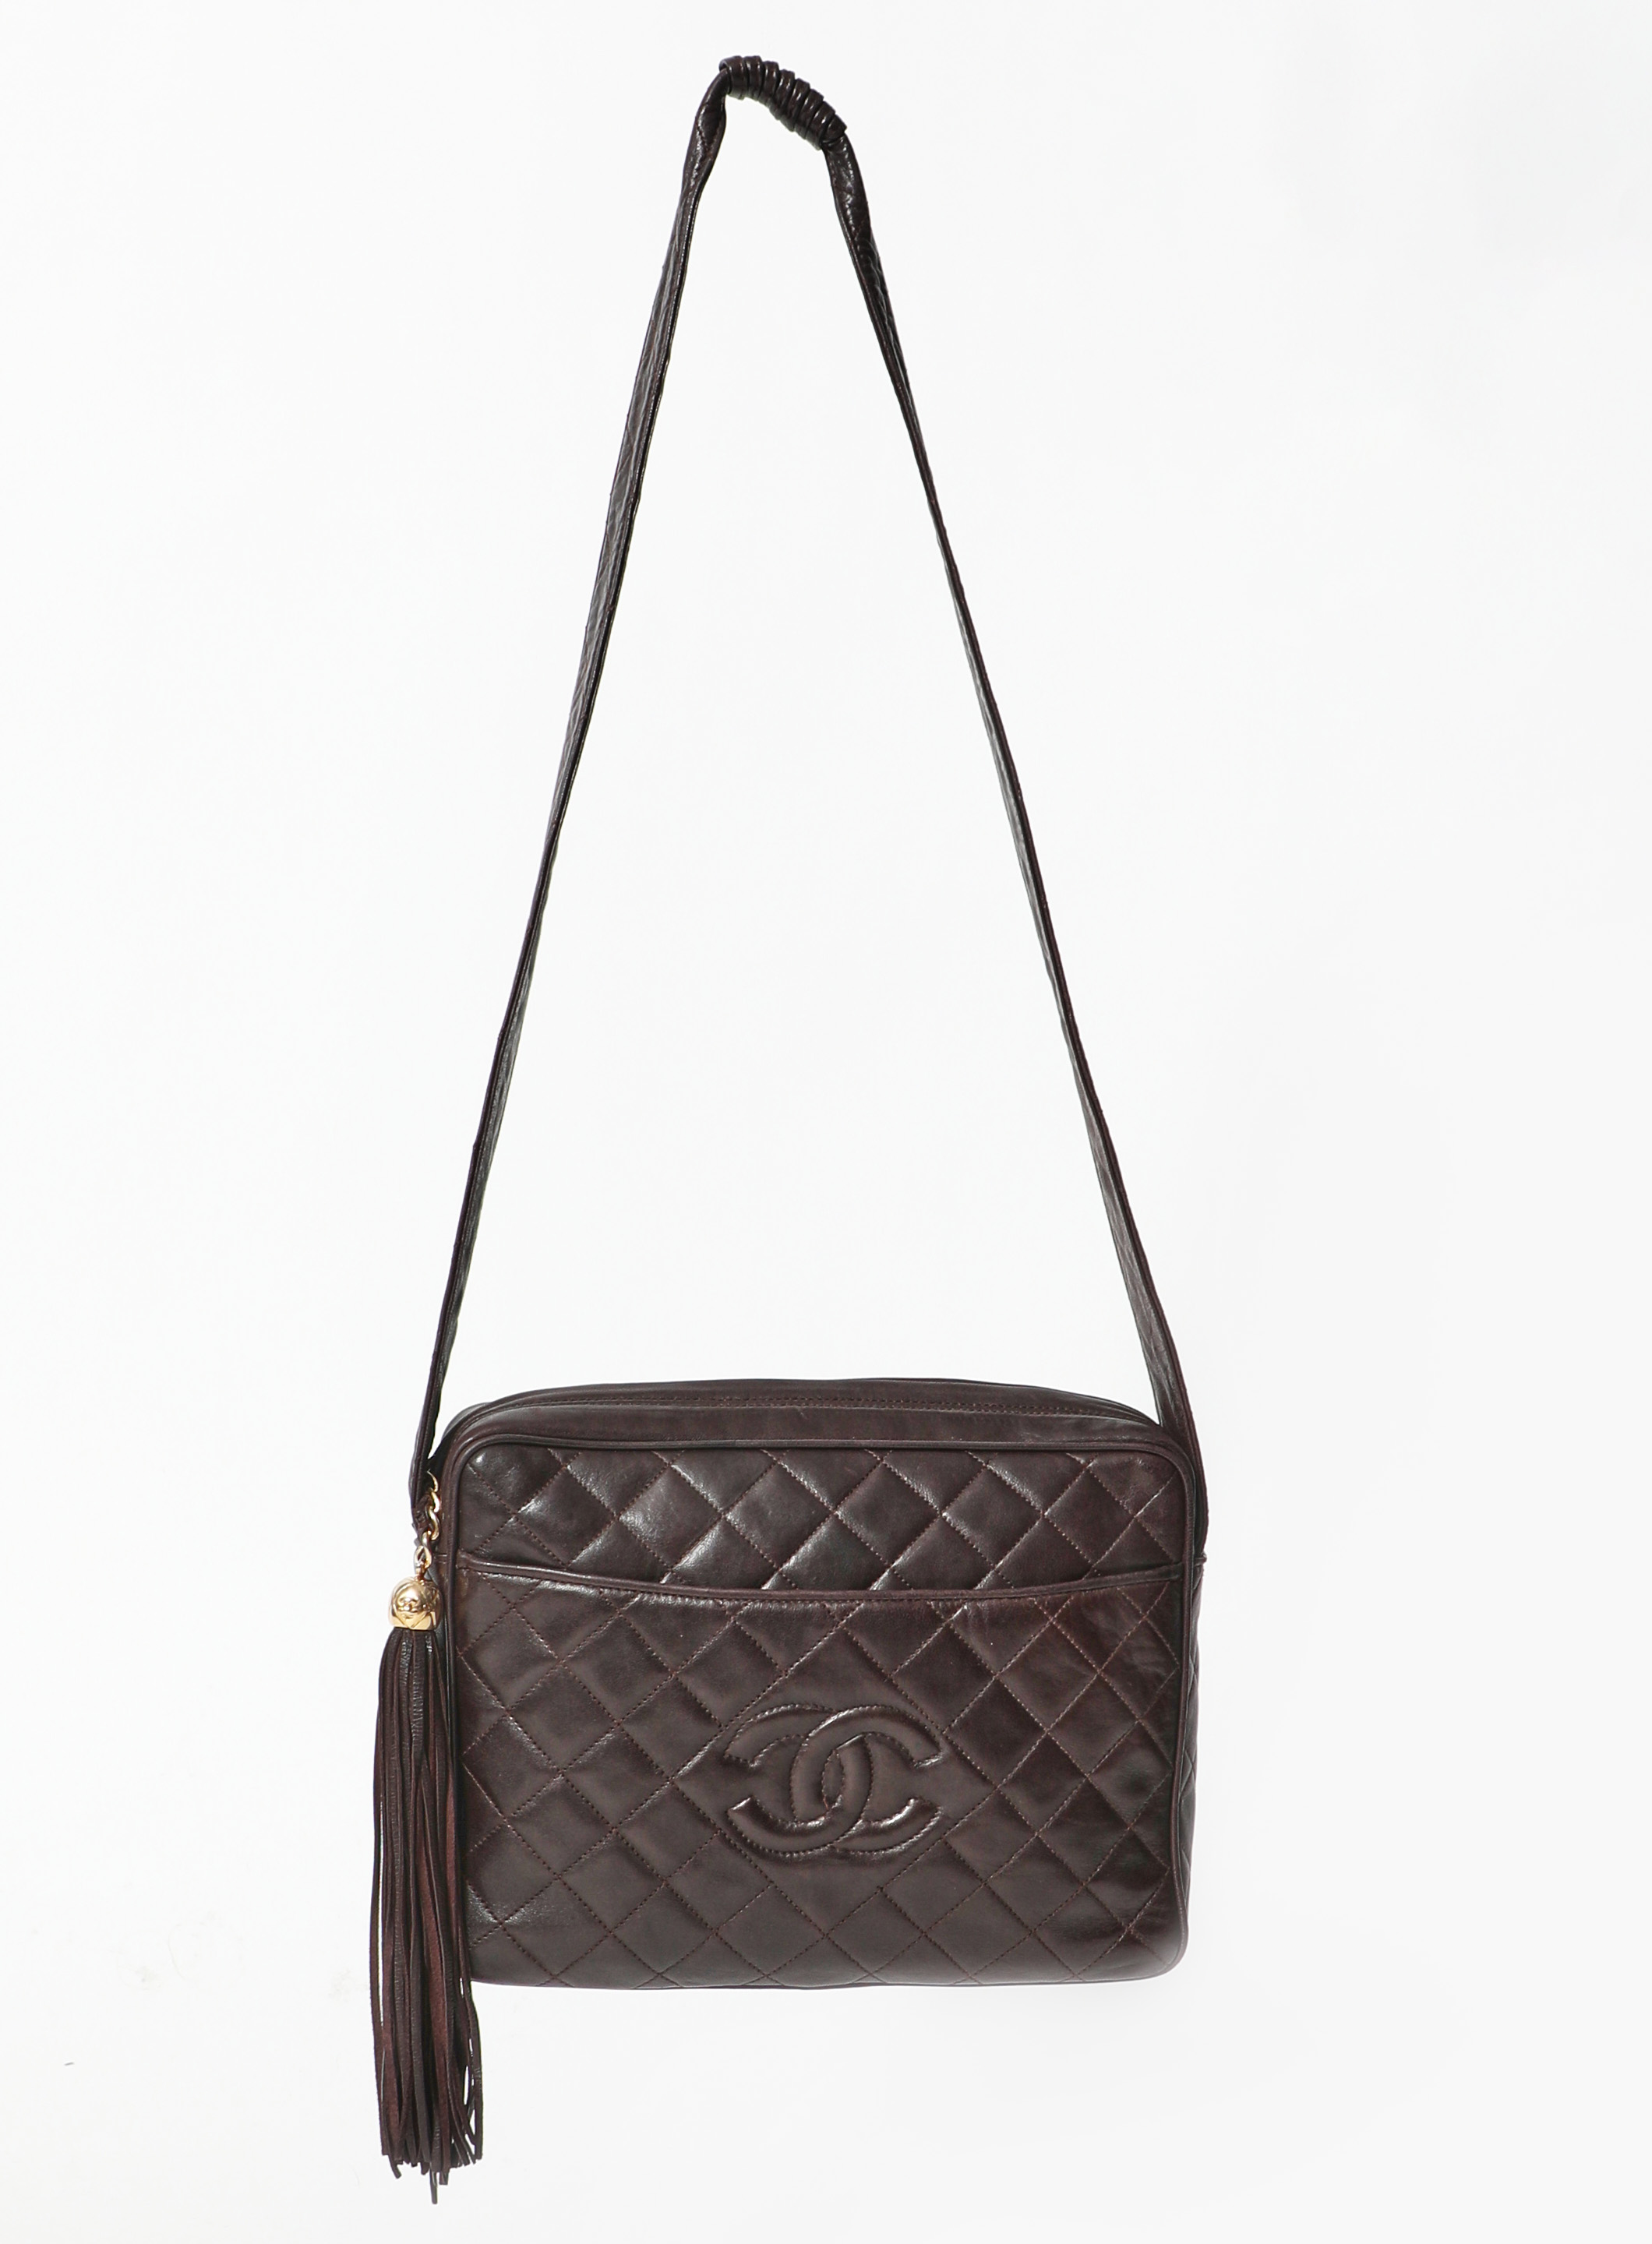 chanel black leather purse vintage